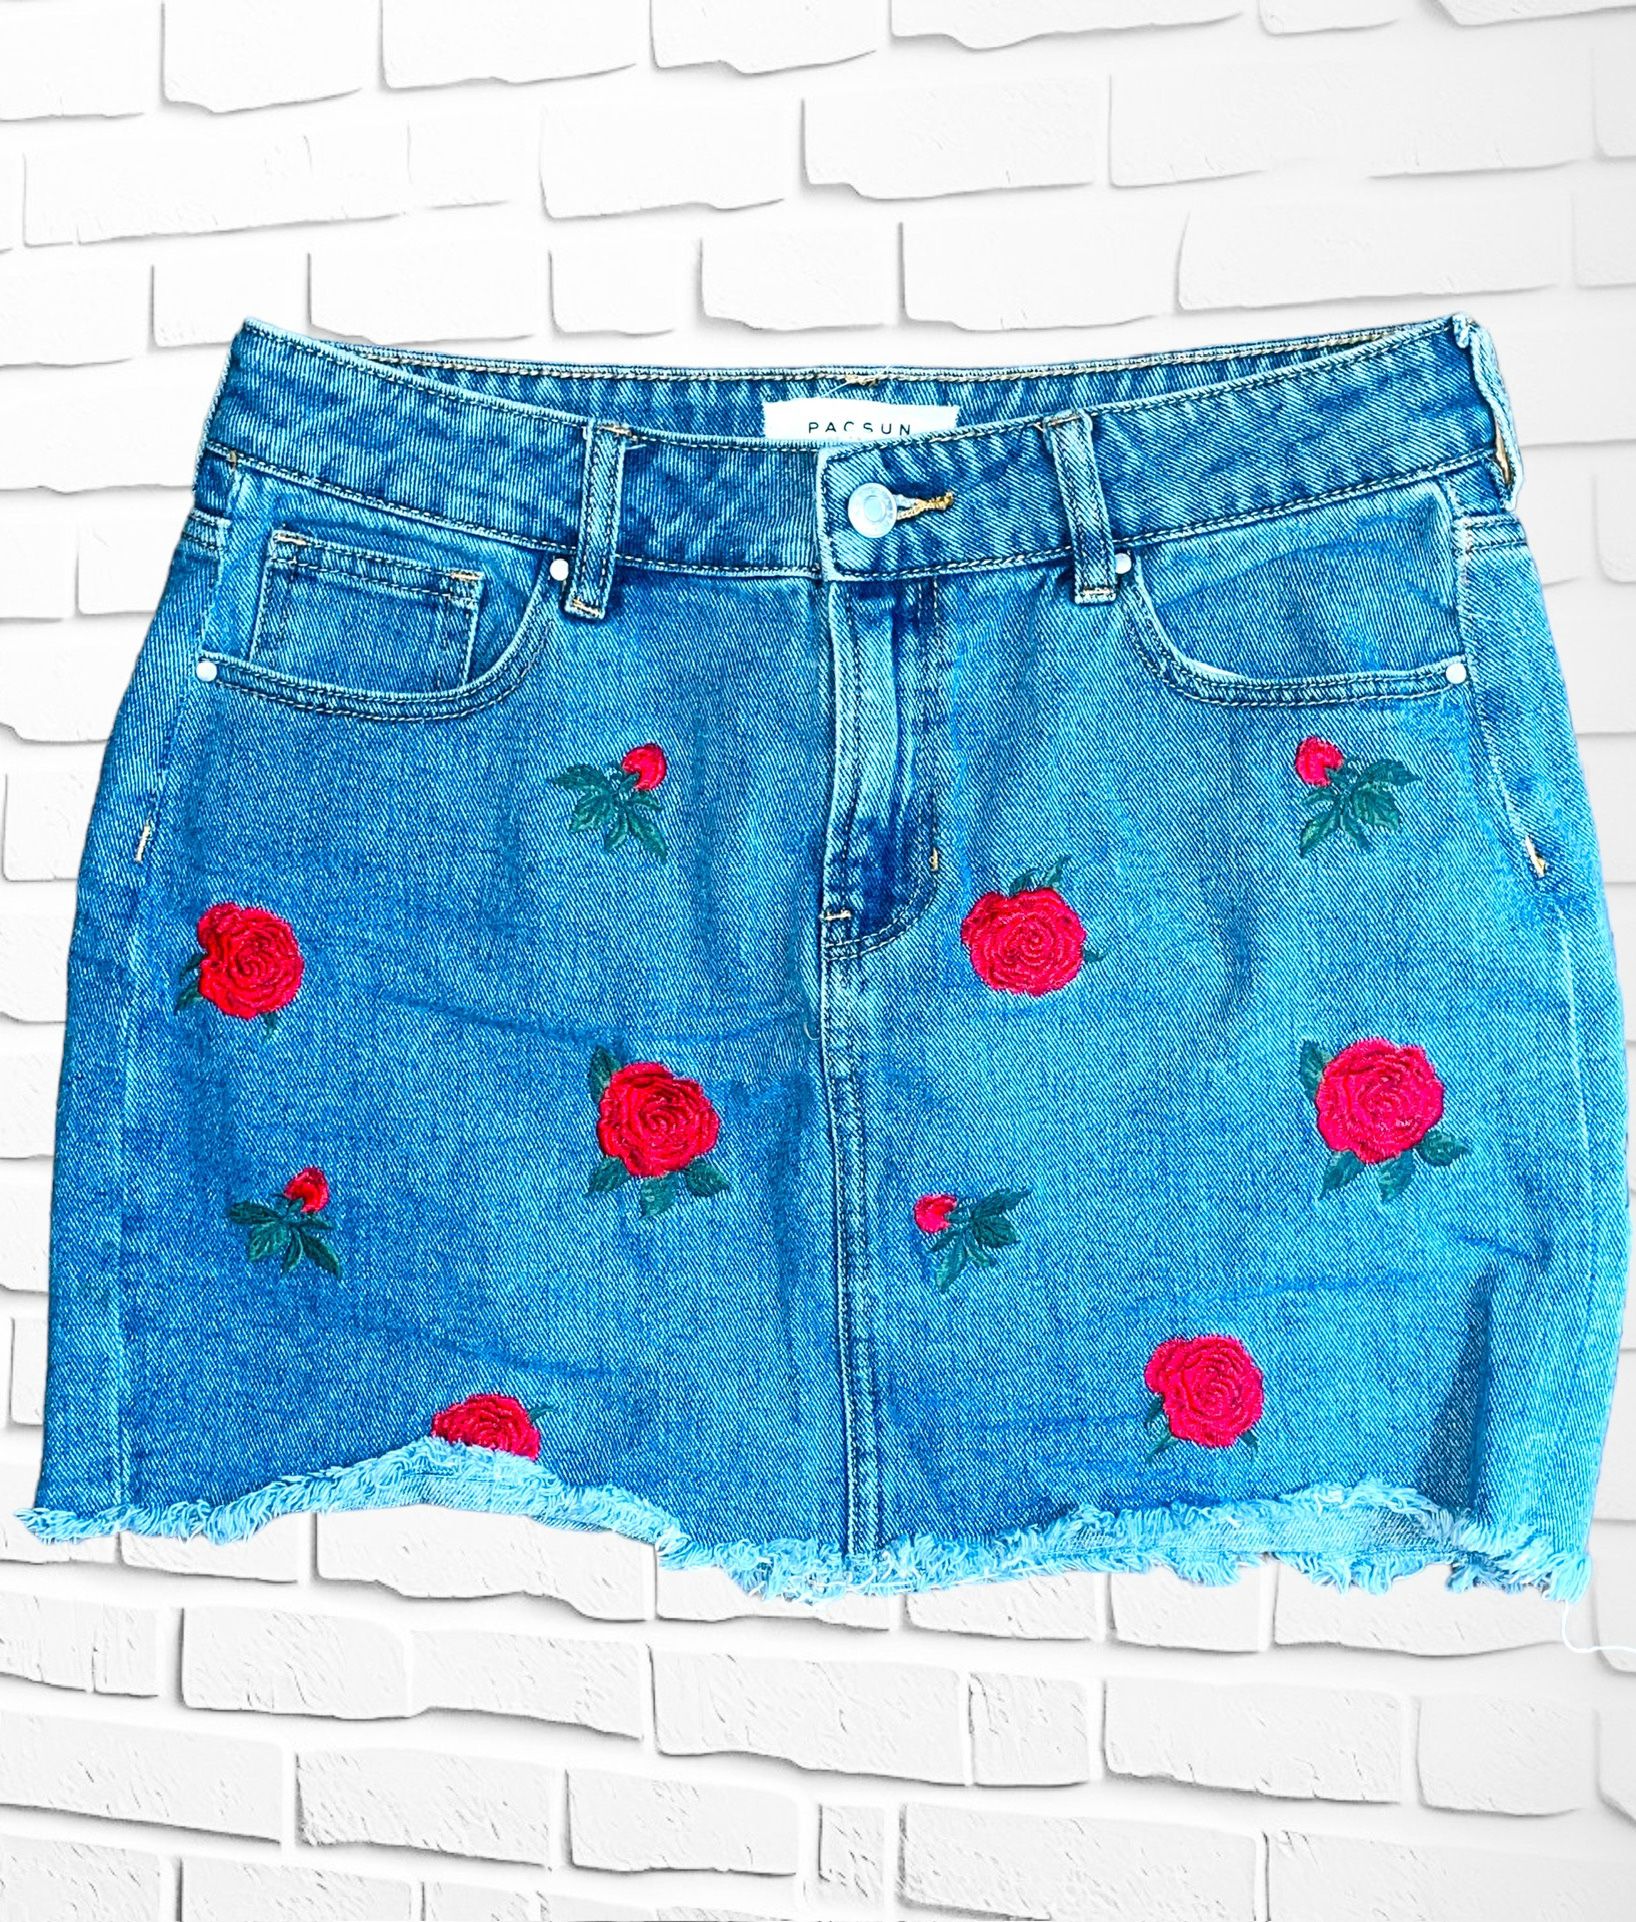 Pacsun Women’s Size 28 Embroidered Medium Wash Denim Mini Skirt • Raw Edge Hem